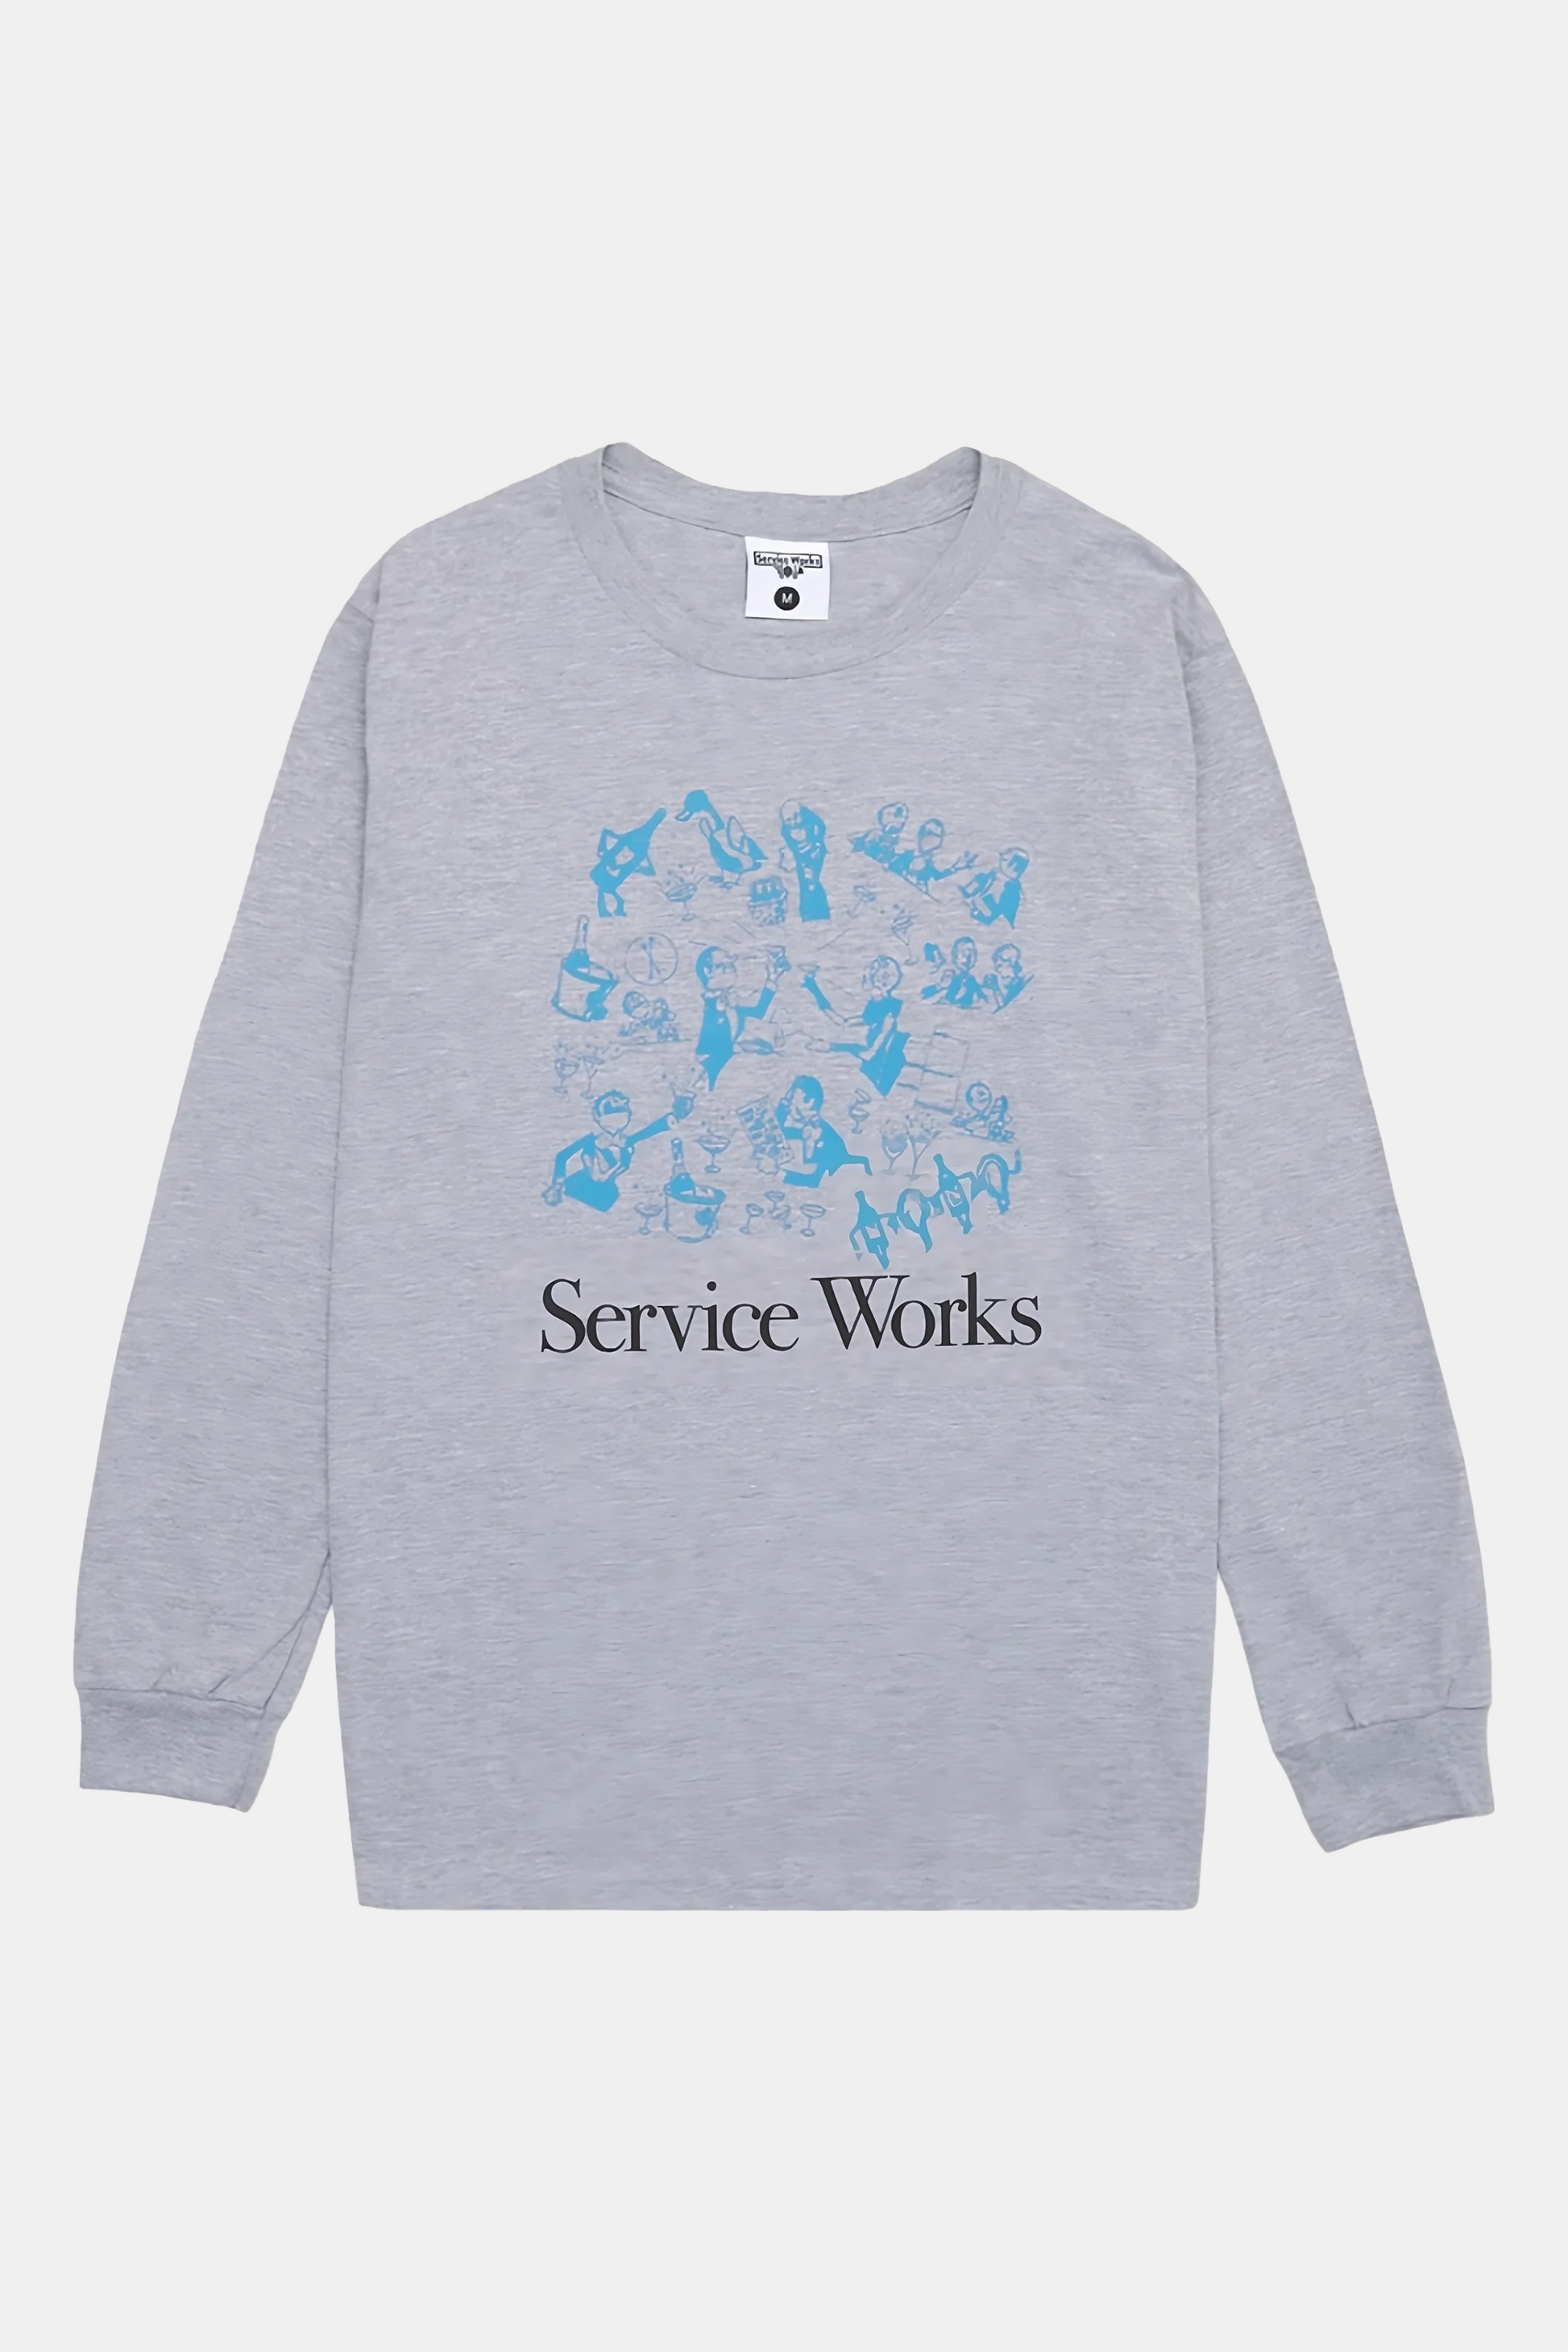 Service Works - Soiree Long Sleeve Tee (Grey)